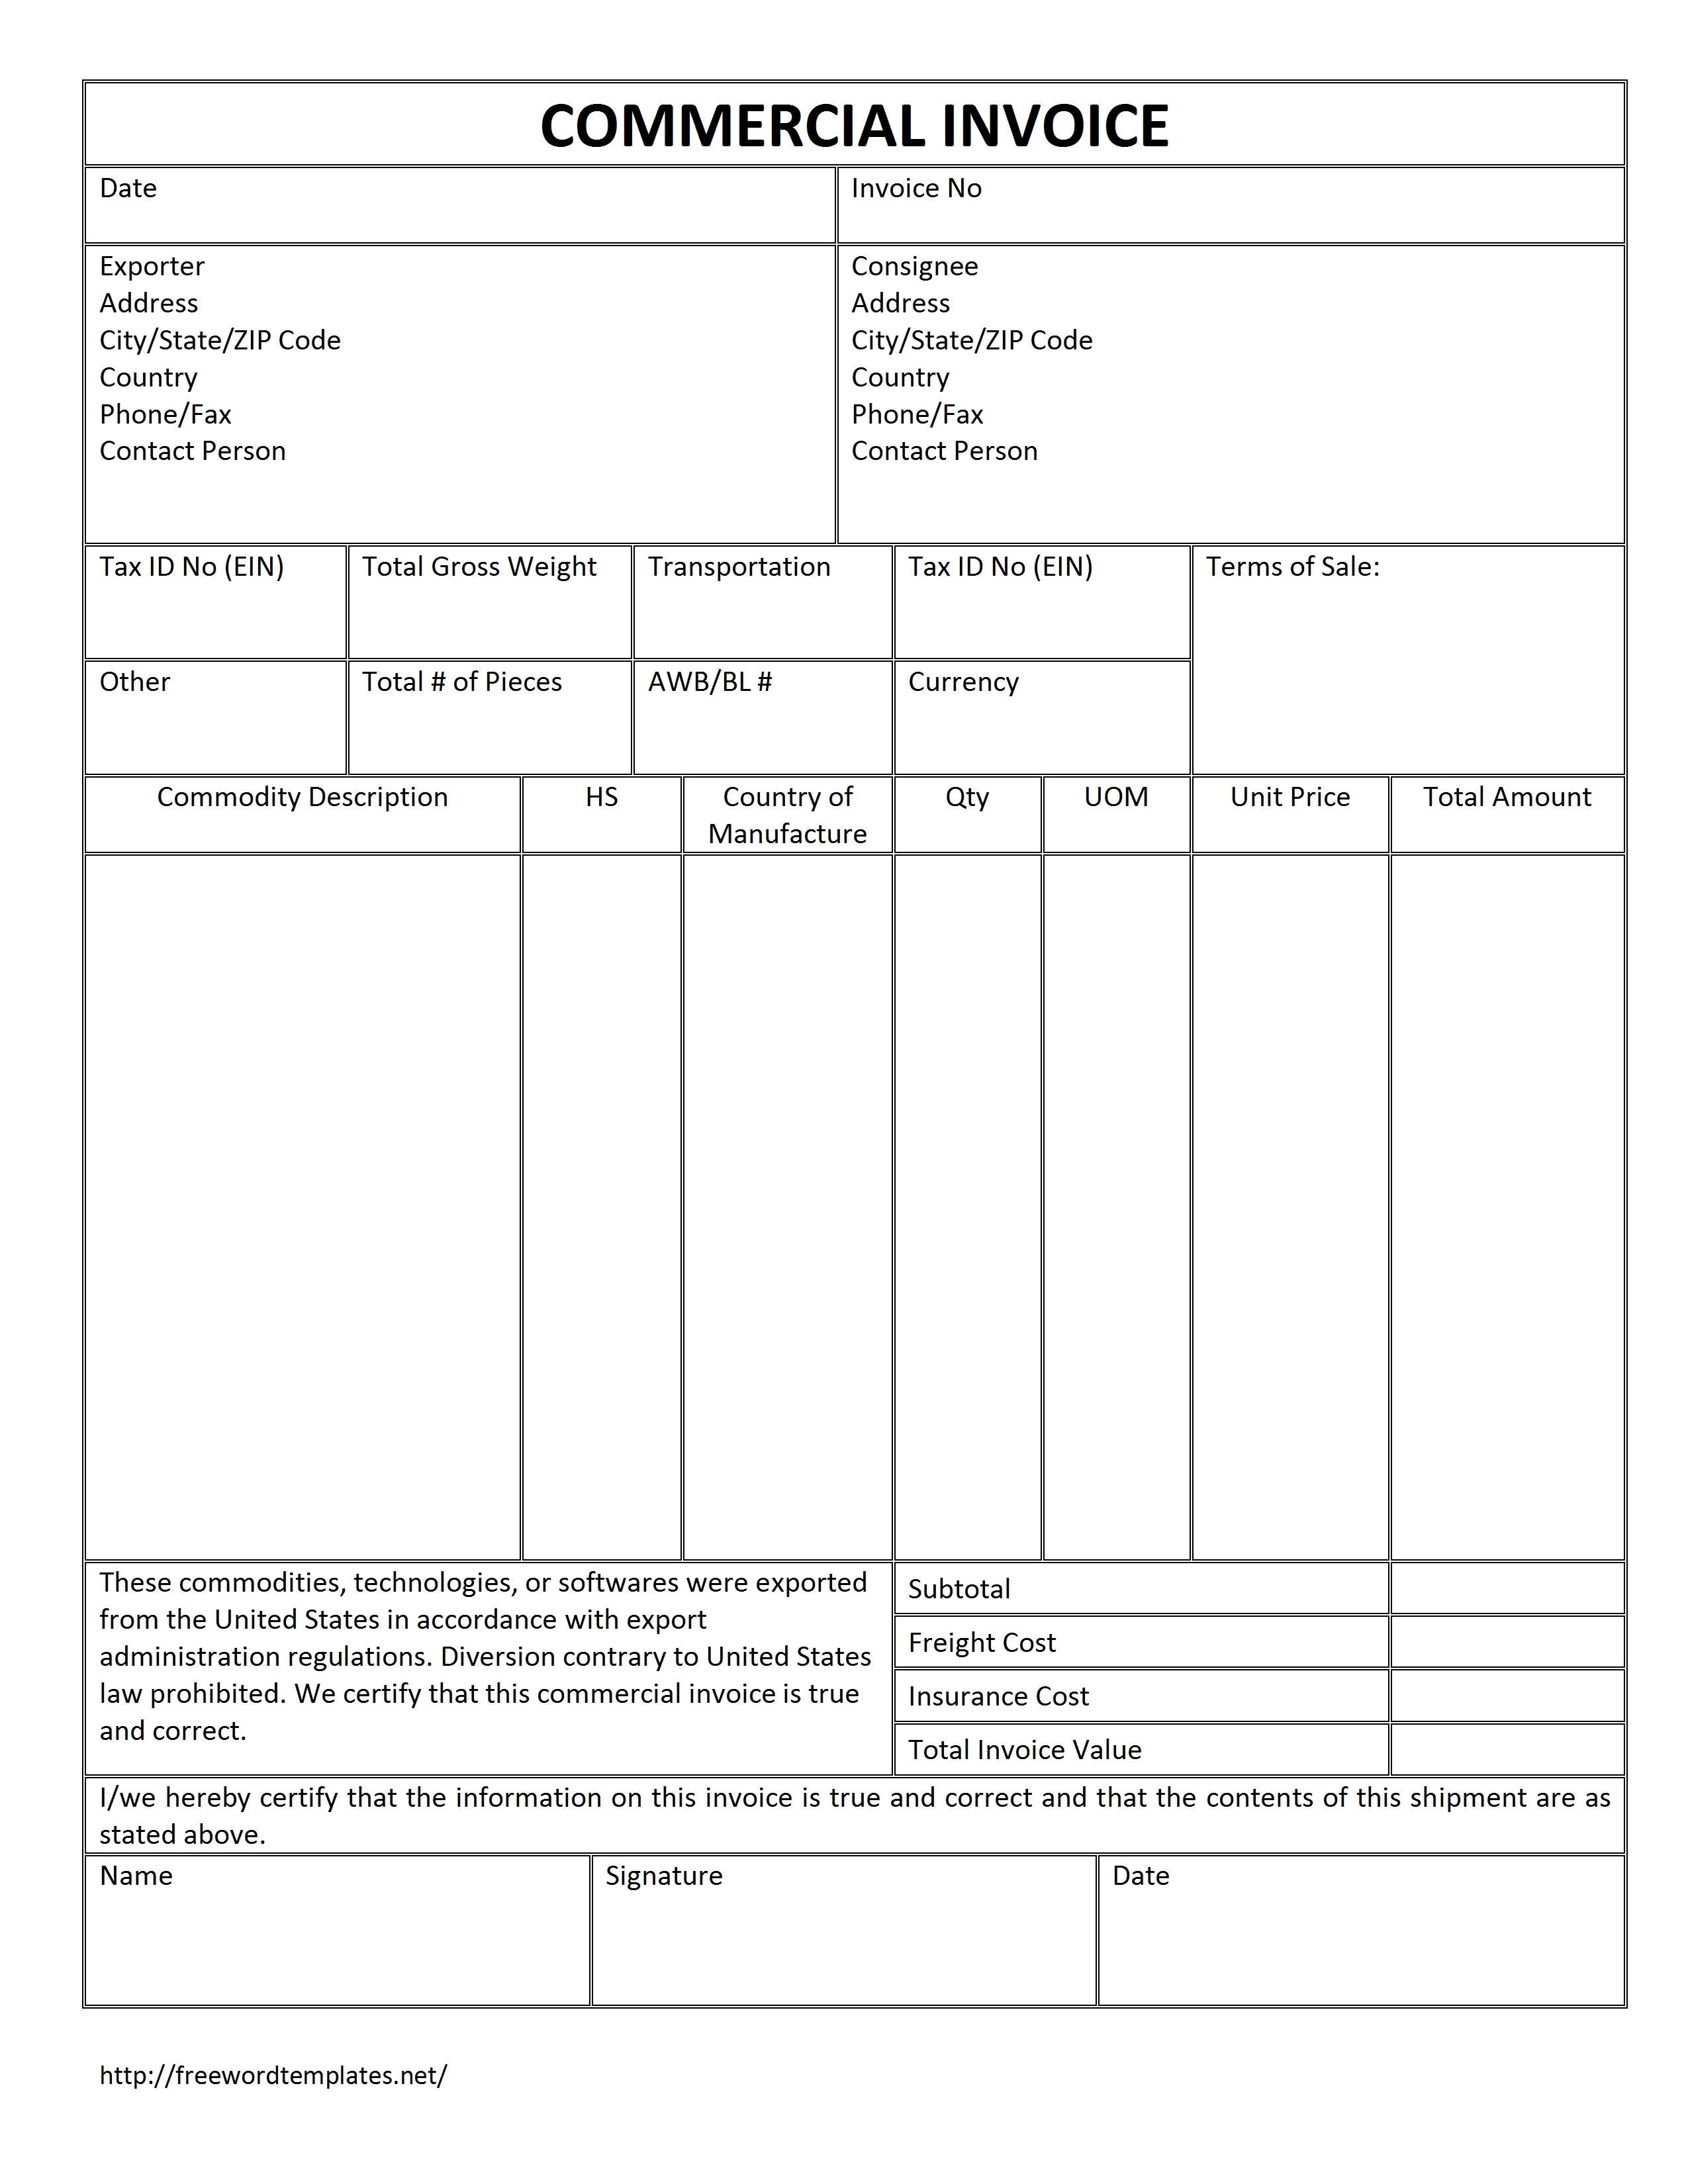 custom invoice template invoice template free 2016 custom invoice forms